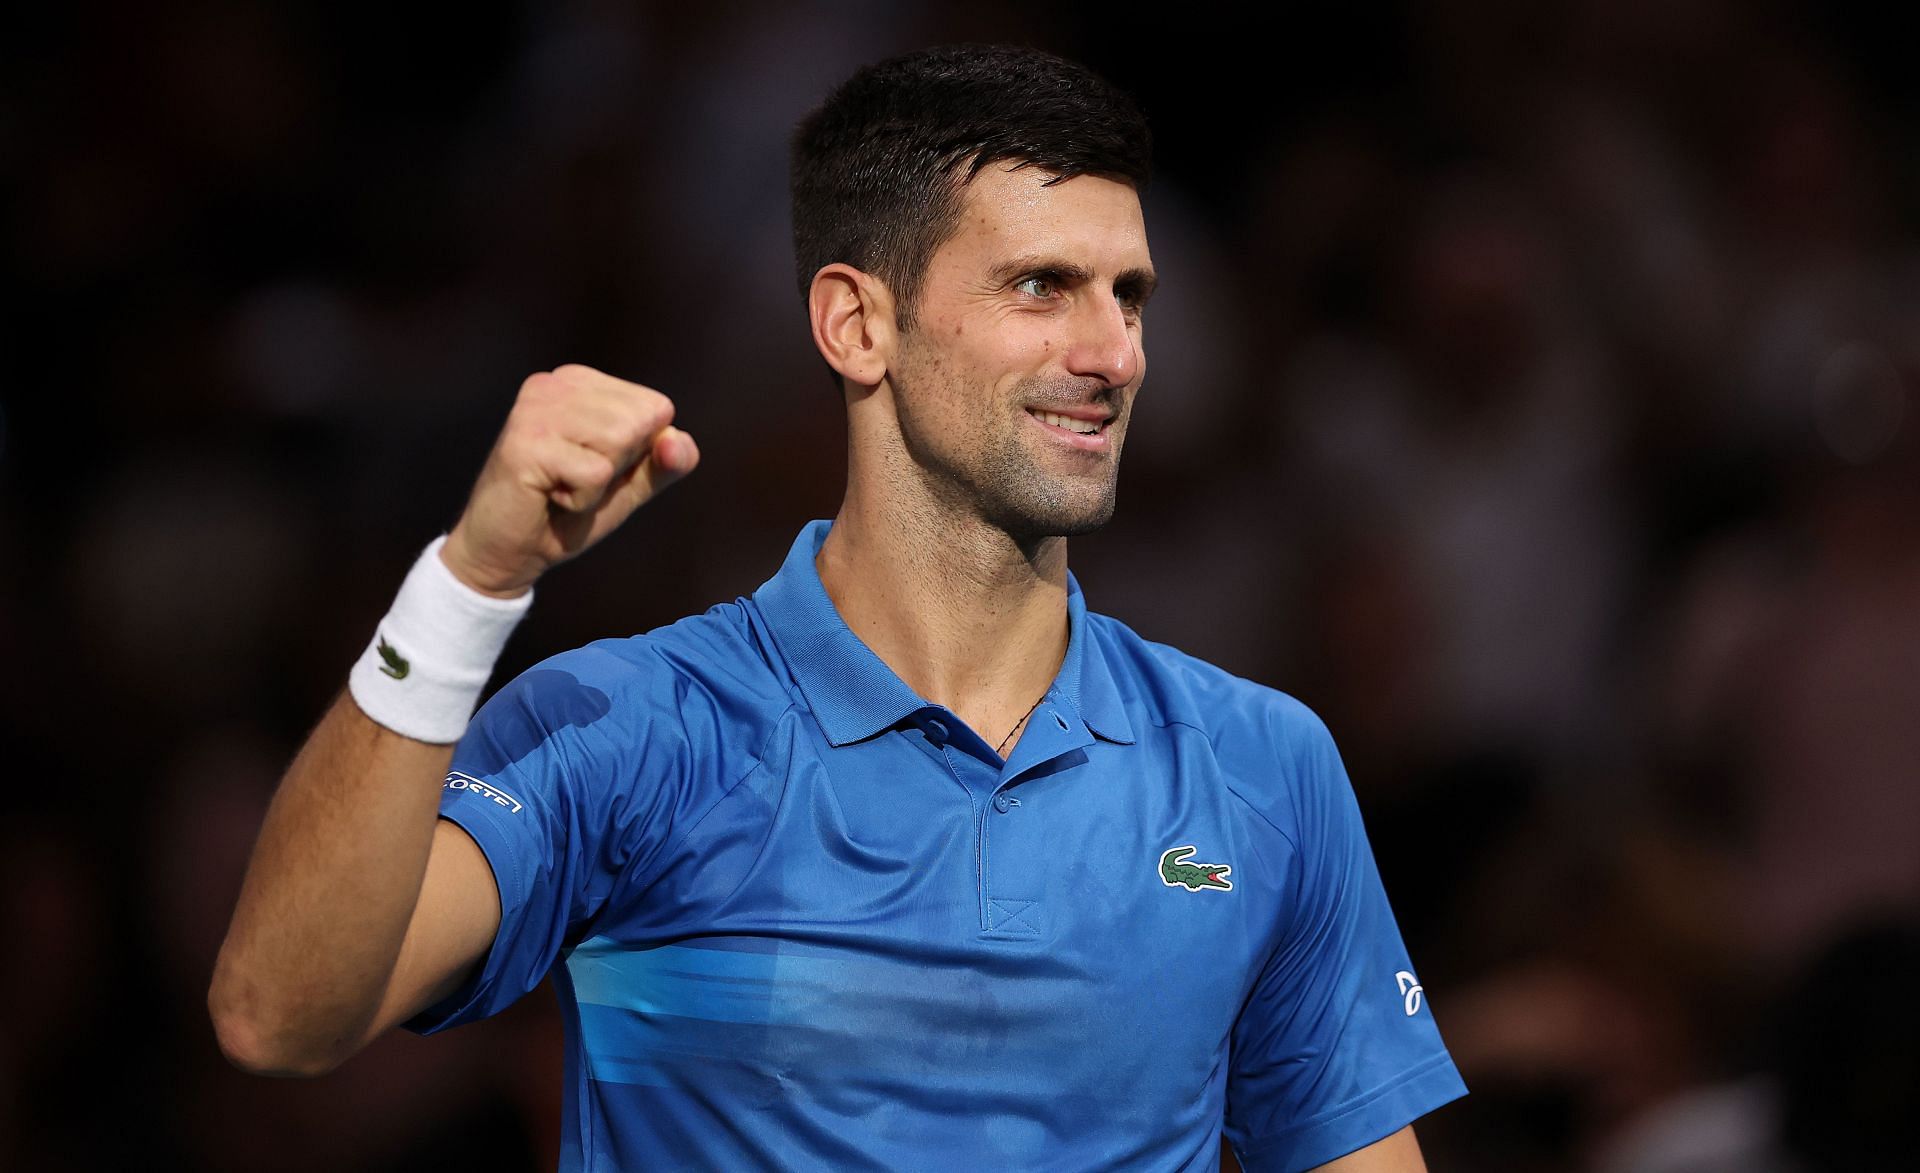 Novakd Djokovic is through to the third round in Paris